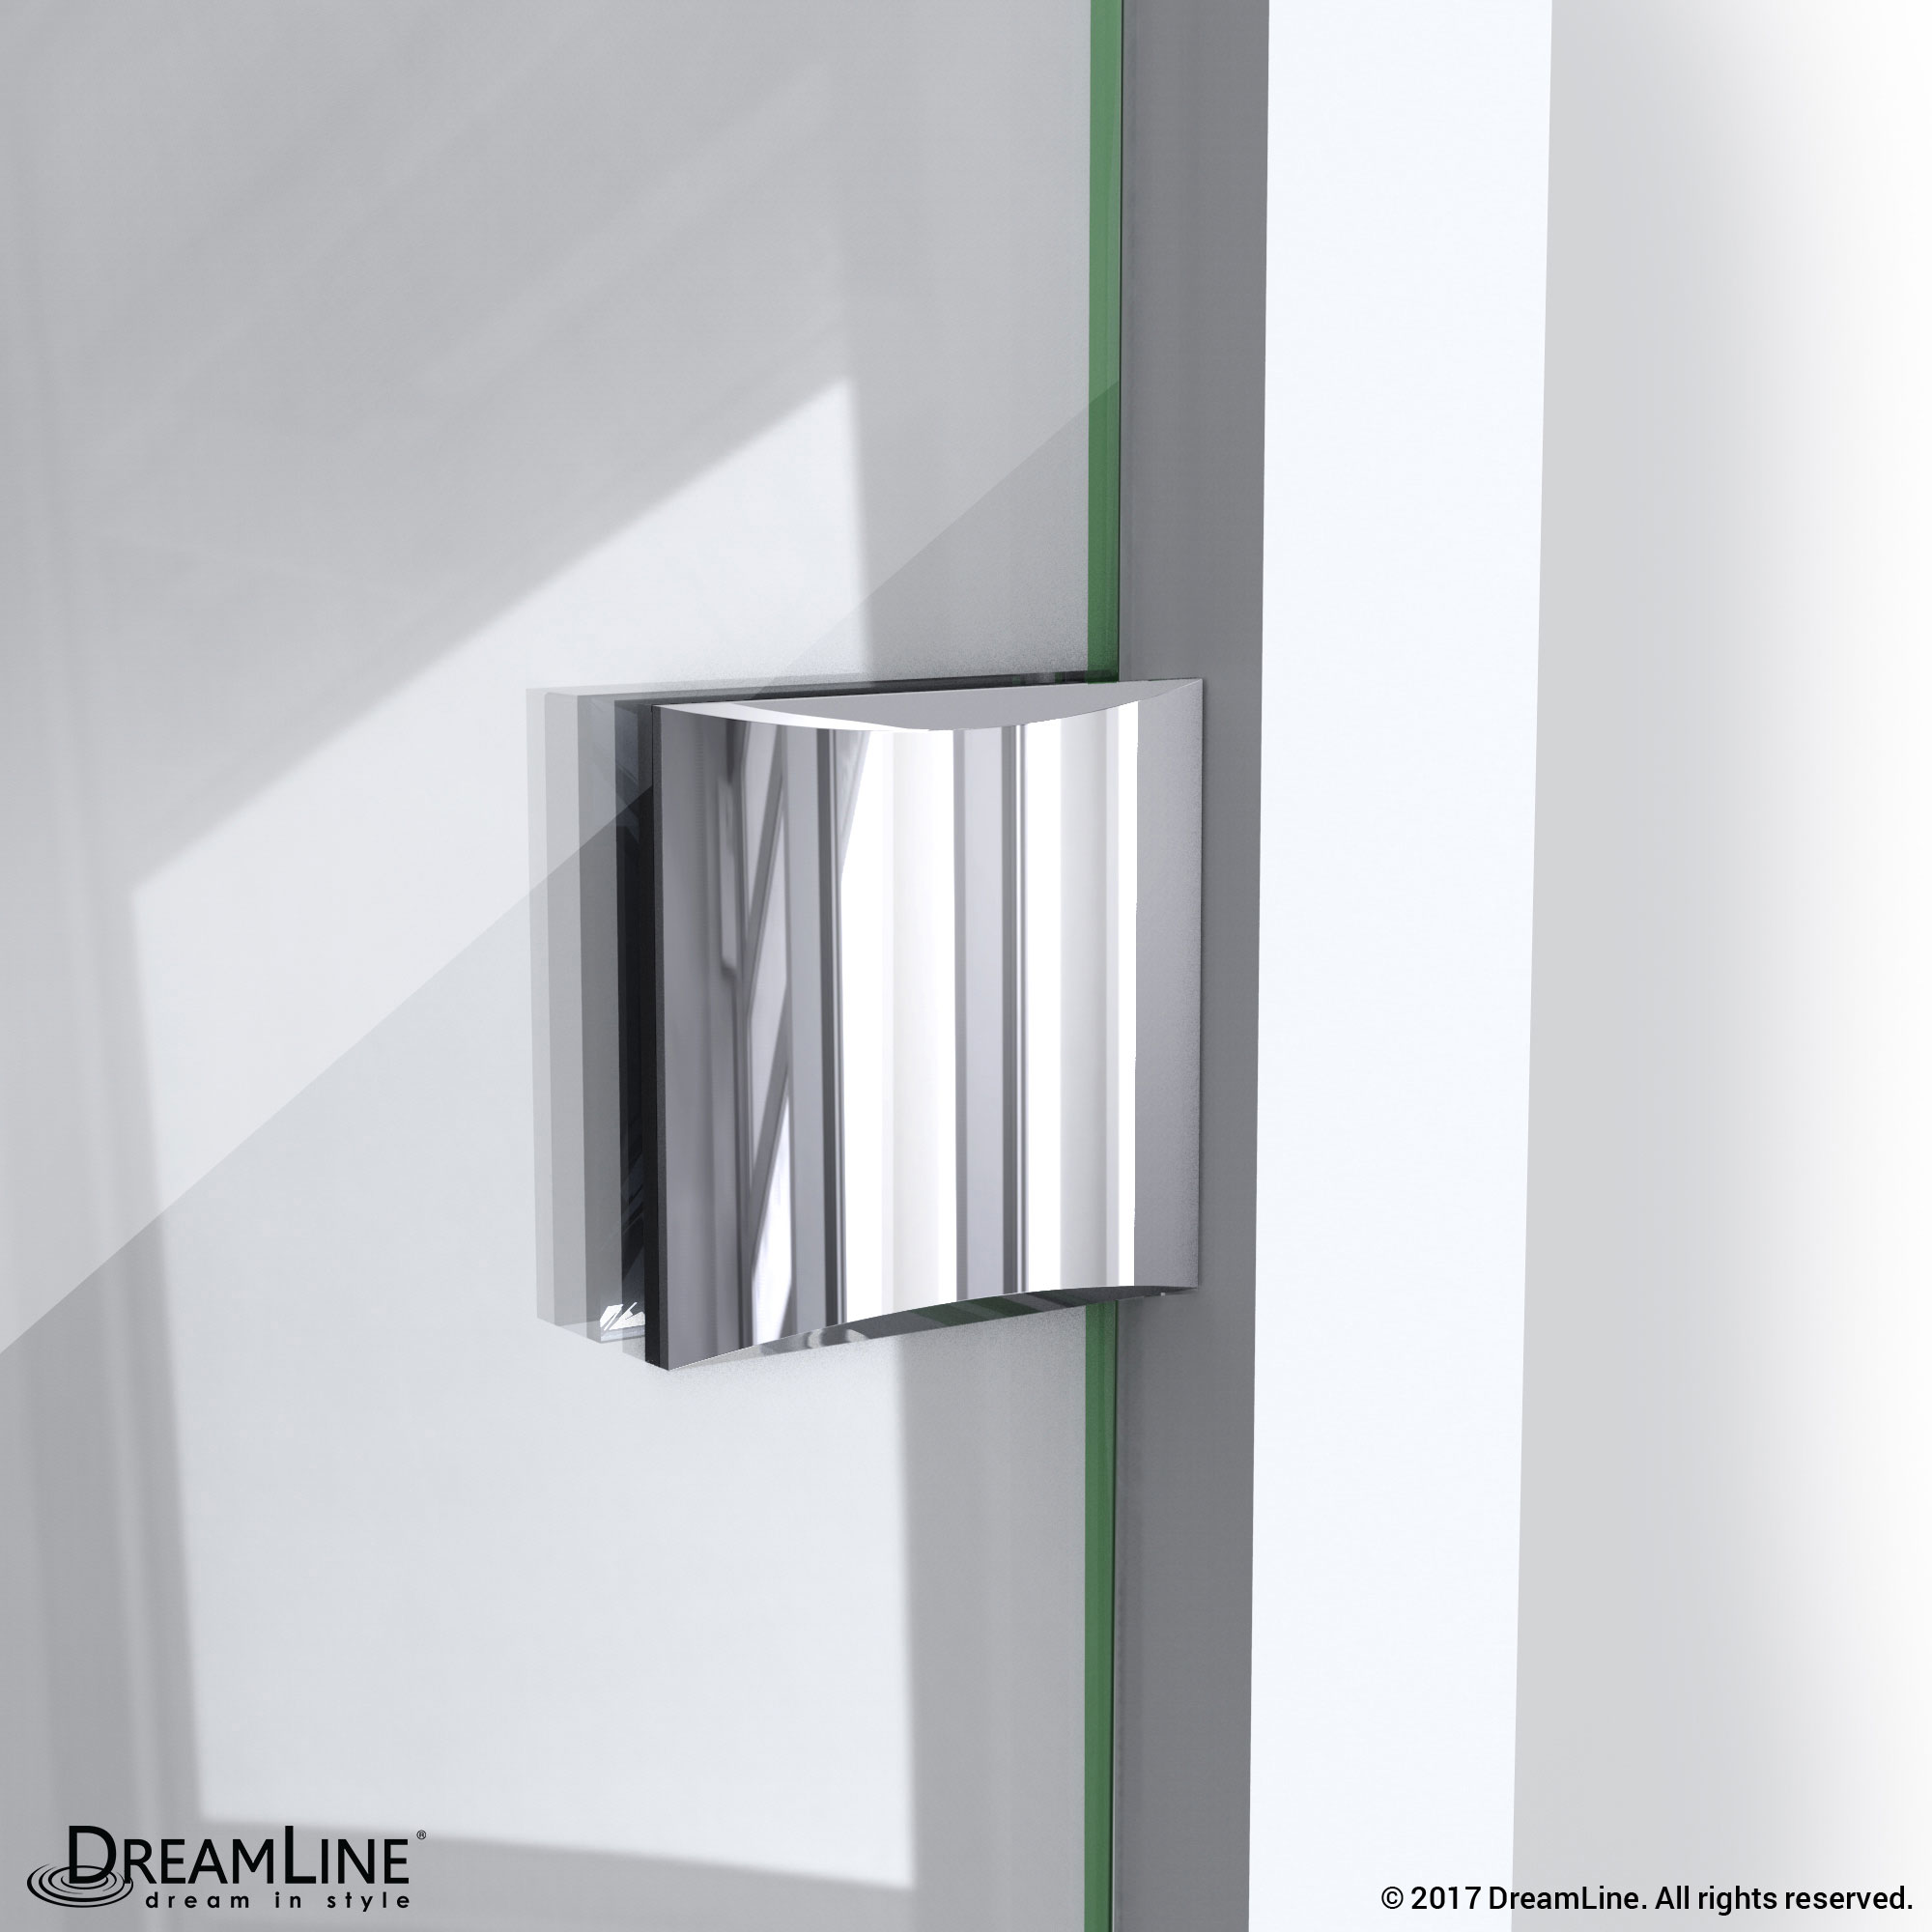 PrismLux 36-5/16" x 36-5/16" Frameless Hinged Shower Enclosure, Clear 3/8" Glass Shower, Brushed Nickel